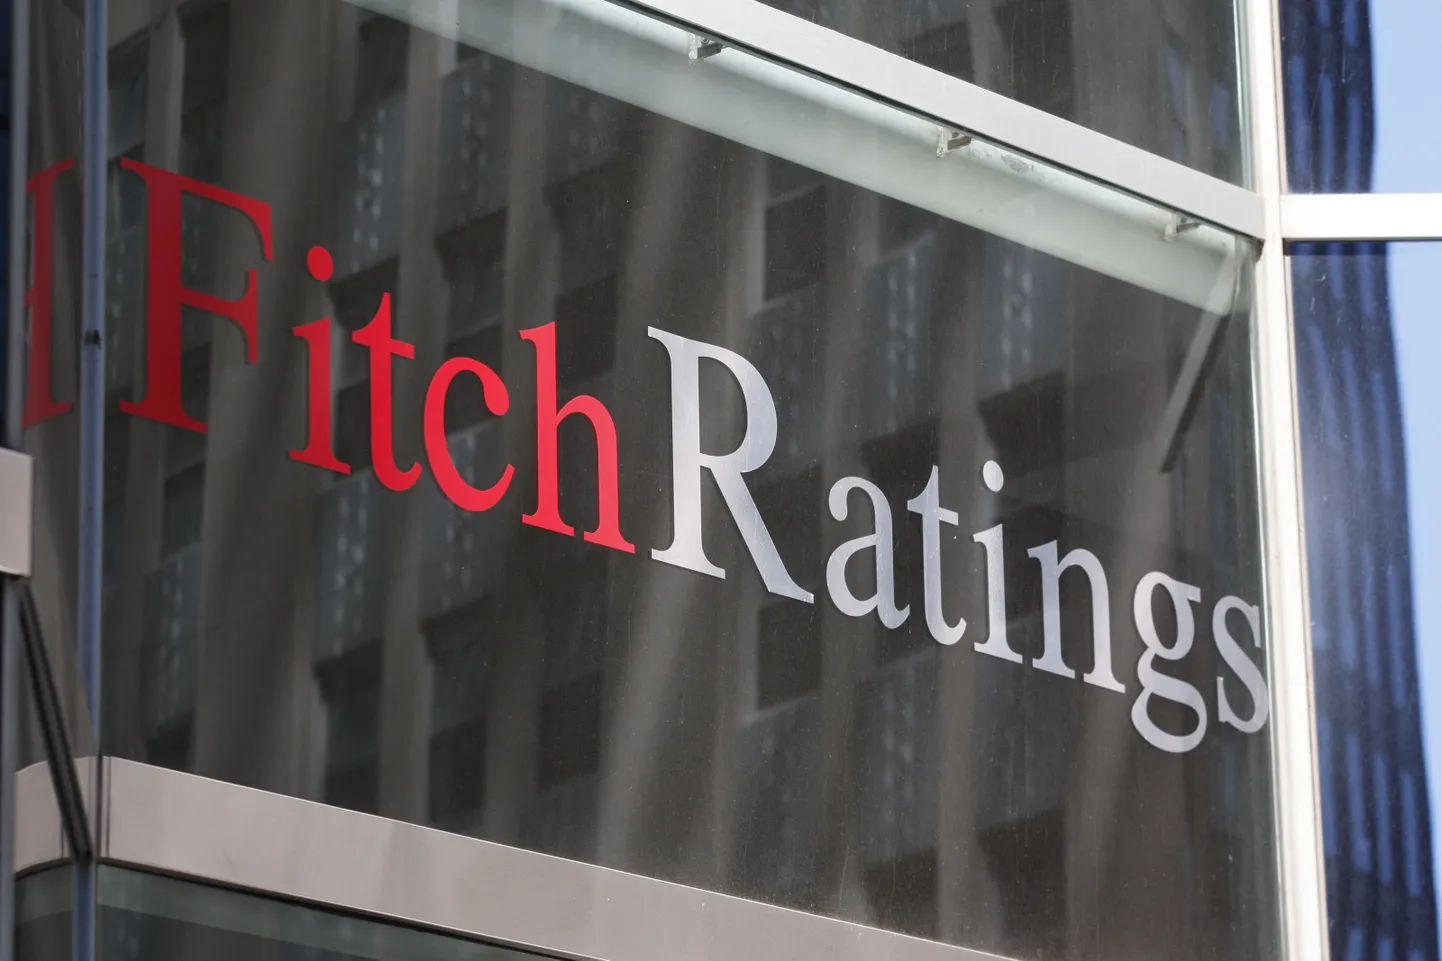 Reitinguagentuuri Fitch Ratings peahoone New Yorgis.